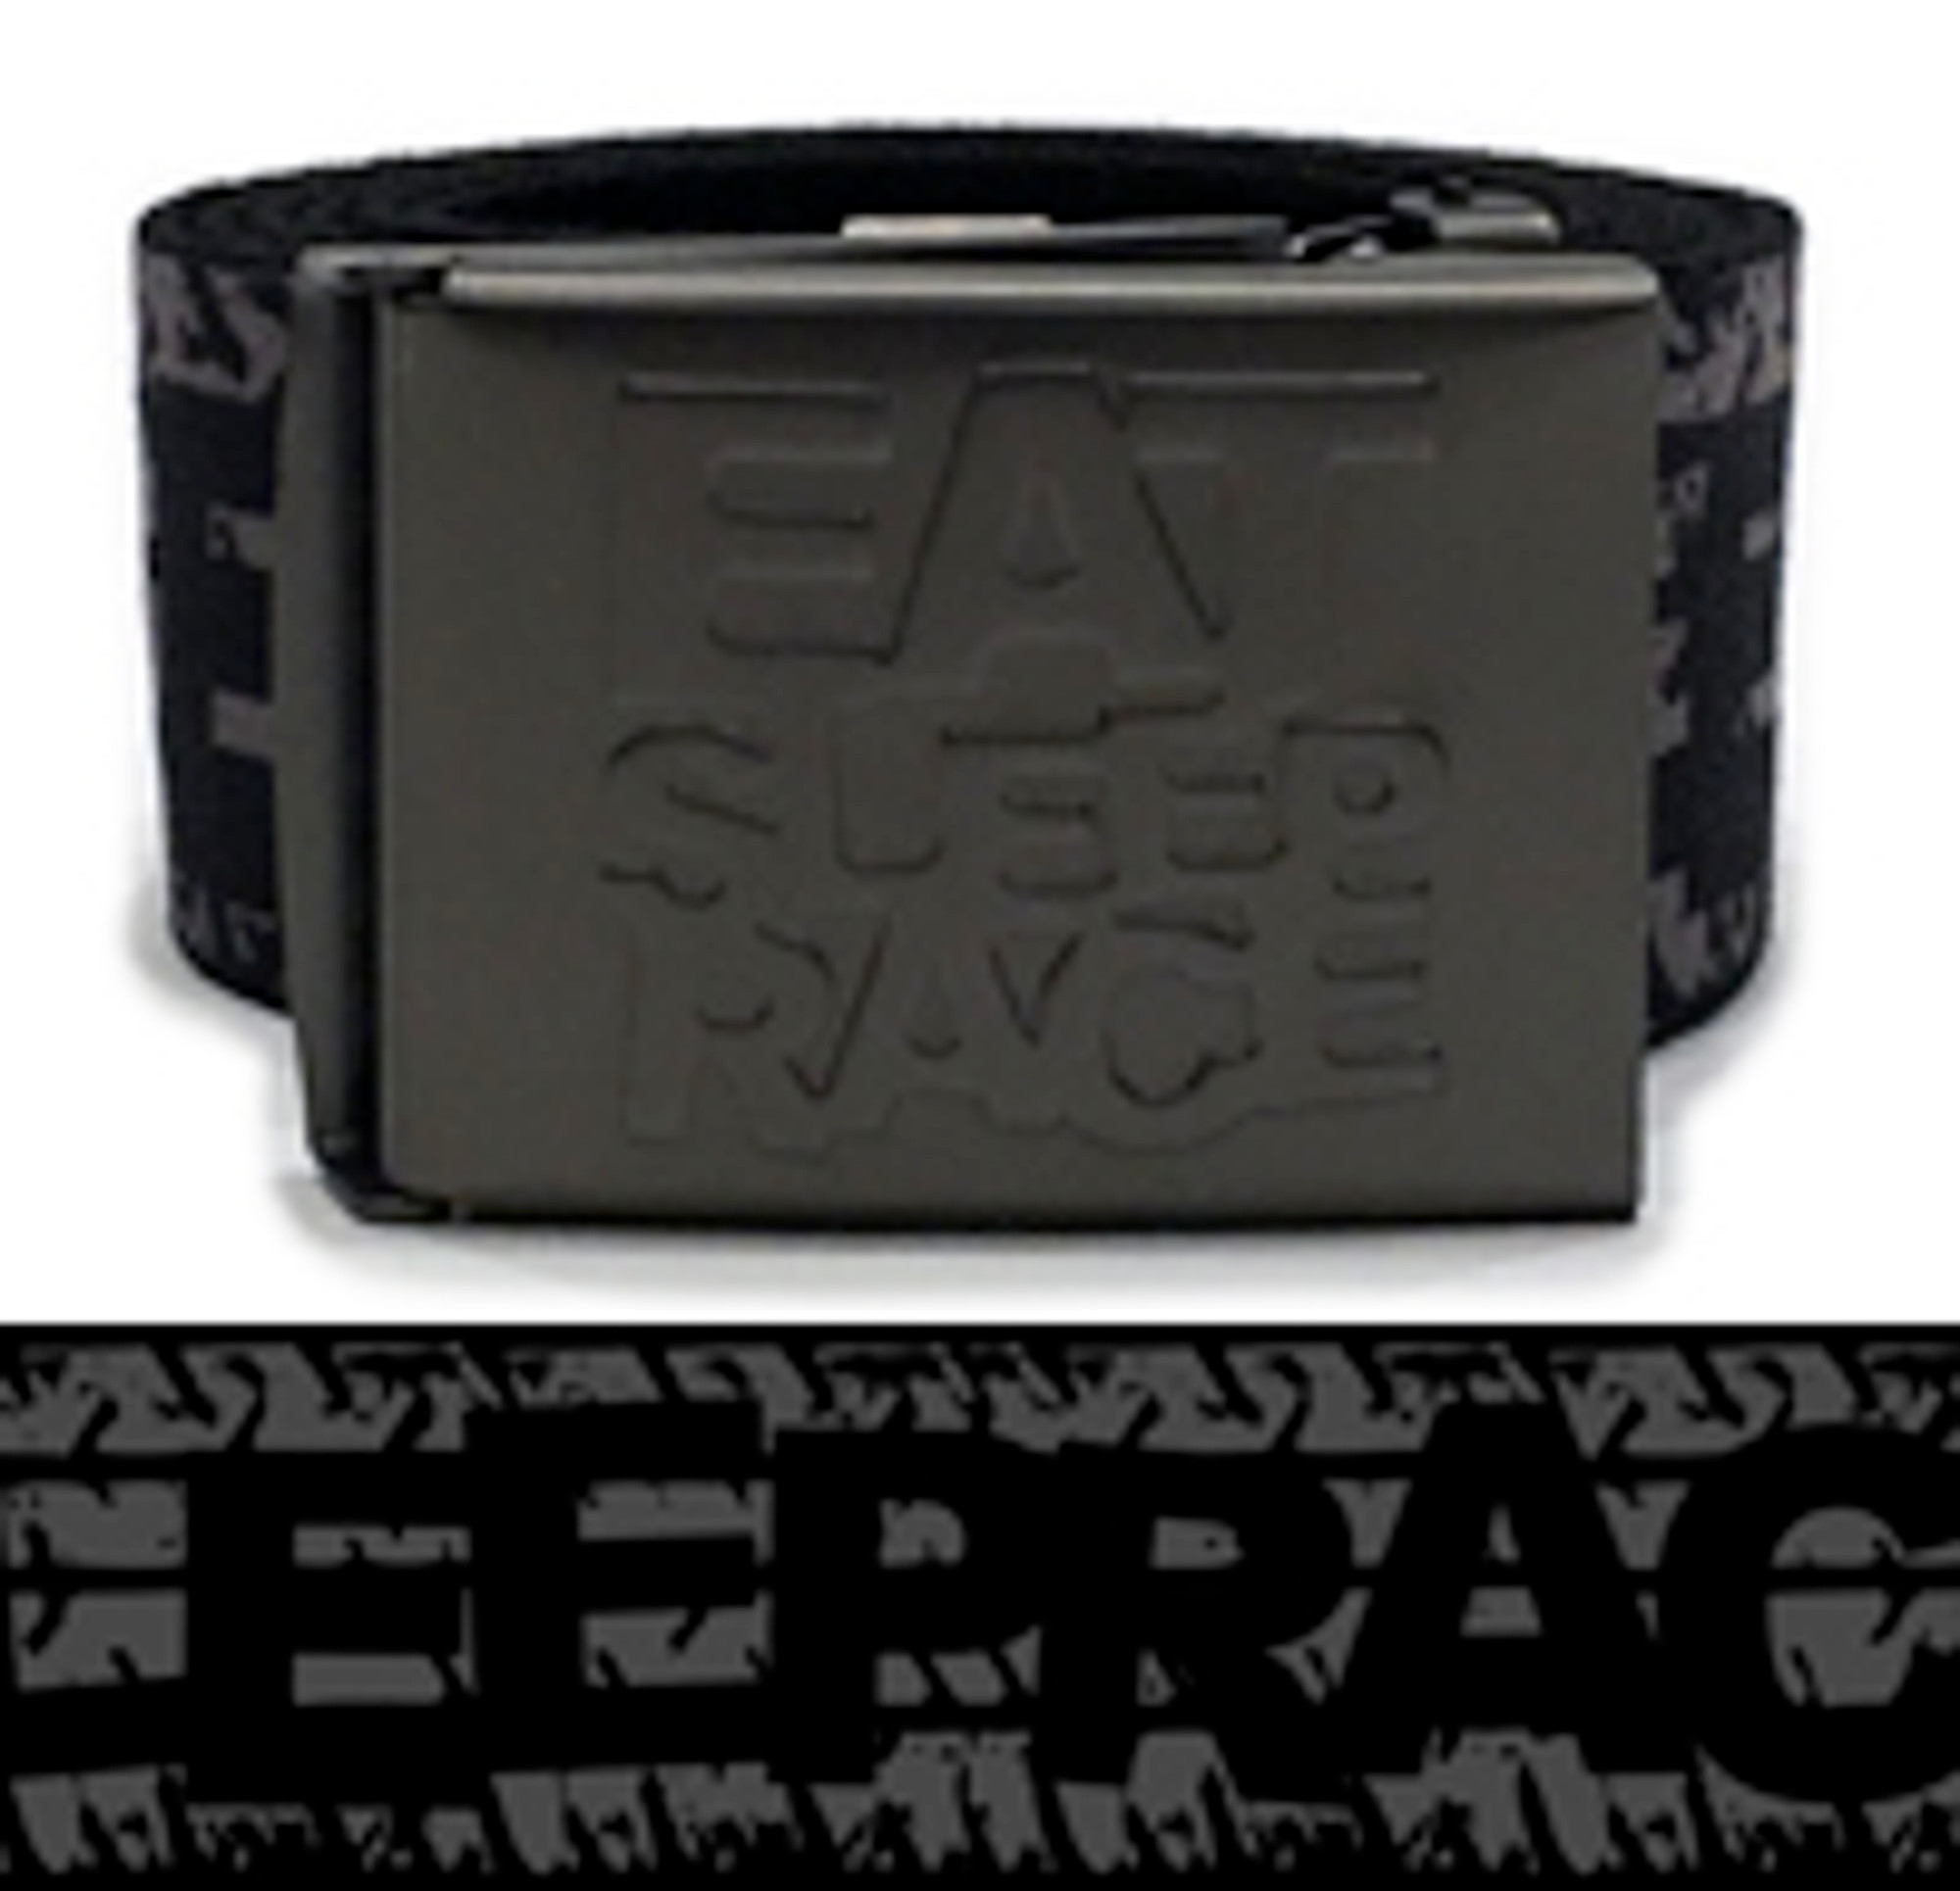 Versace Logo License Plate Leather Belt In Black